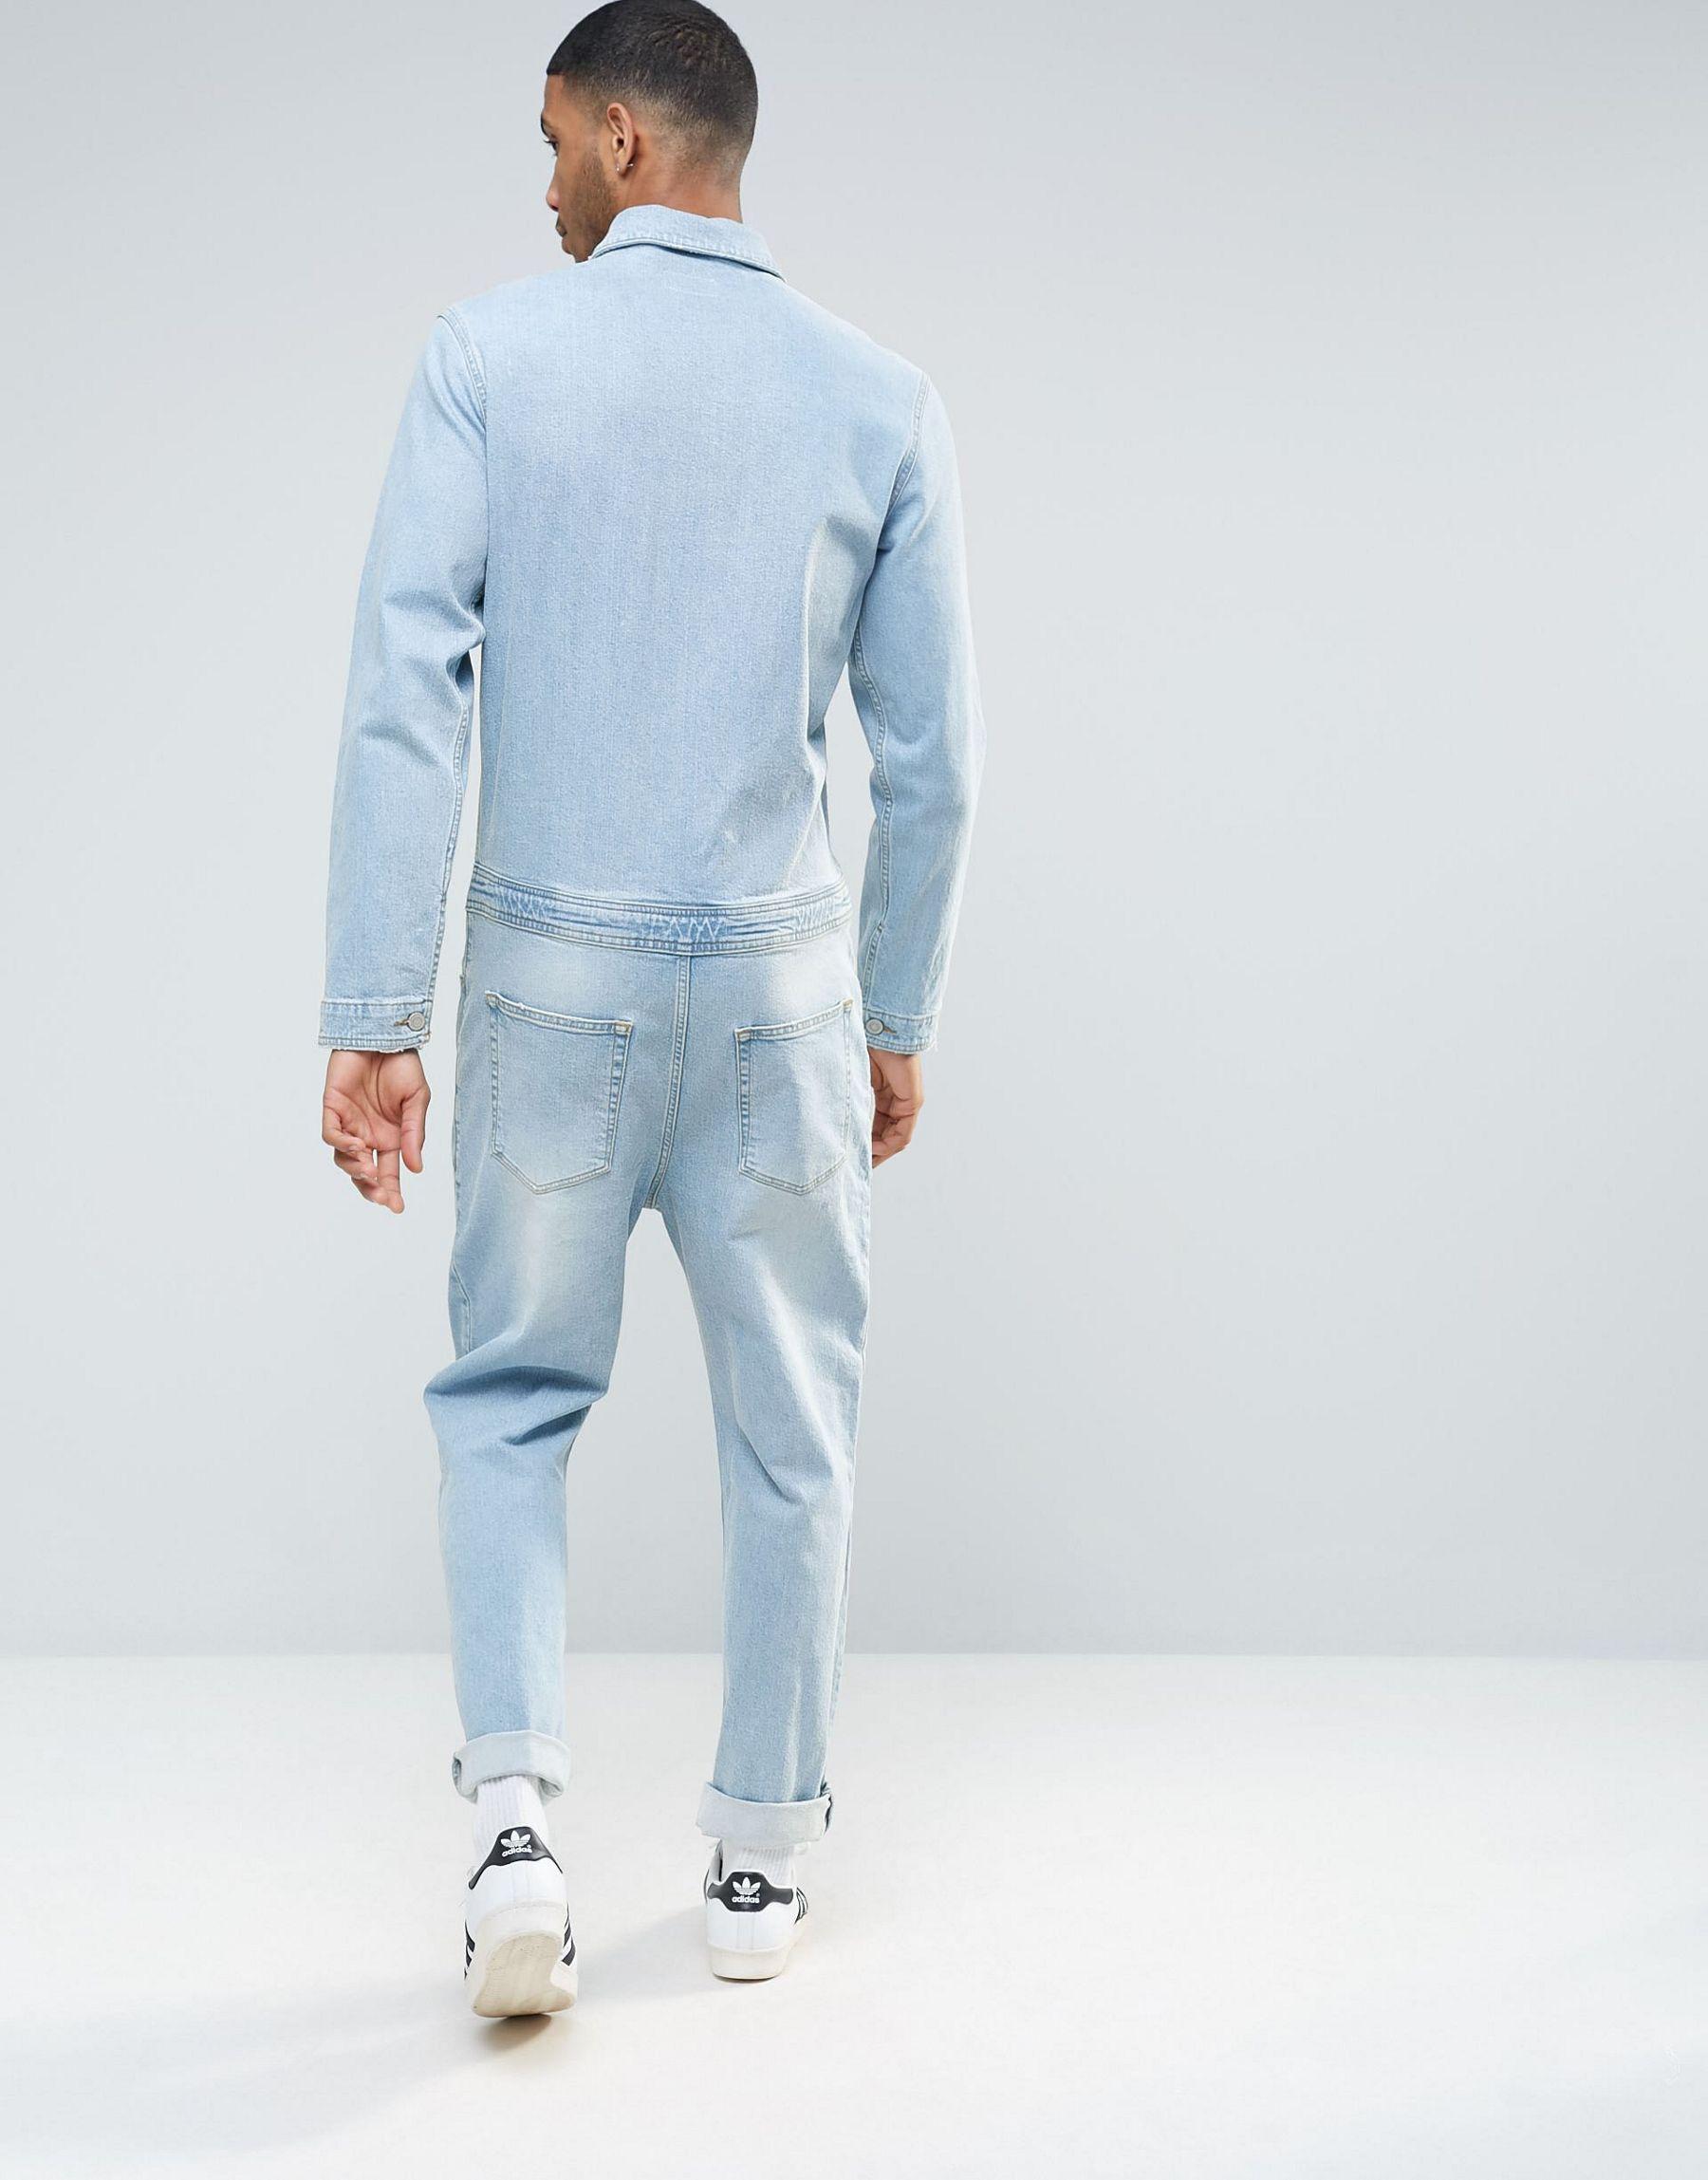 New Simple Smoky Gray Men 2 Piece Sets Spring Long Sleeve Denim Jacket +  Jeans Fashion